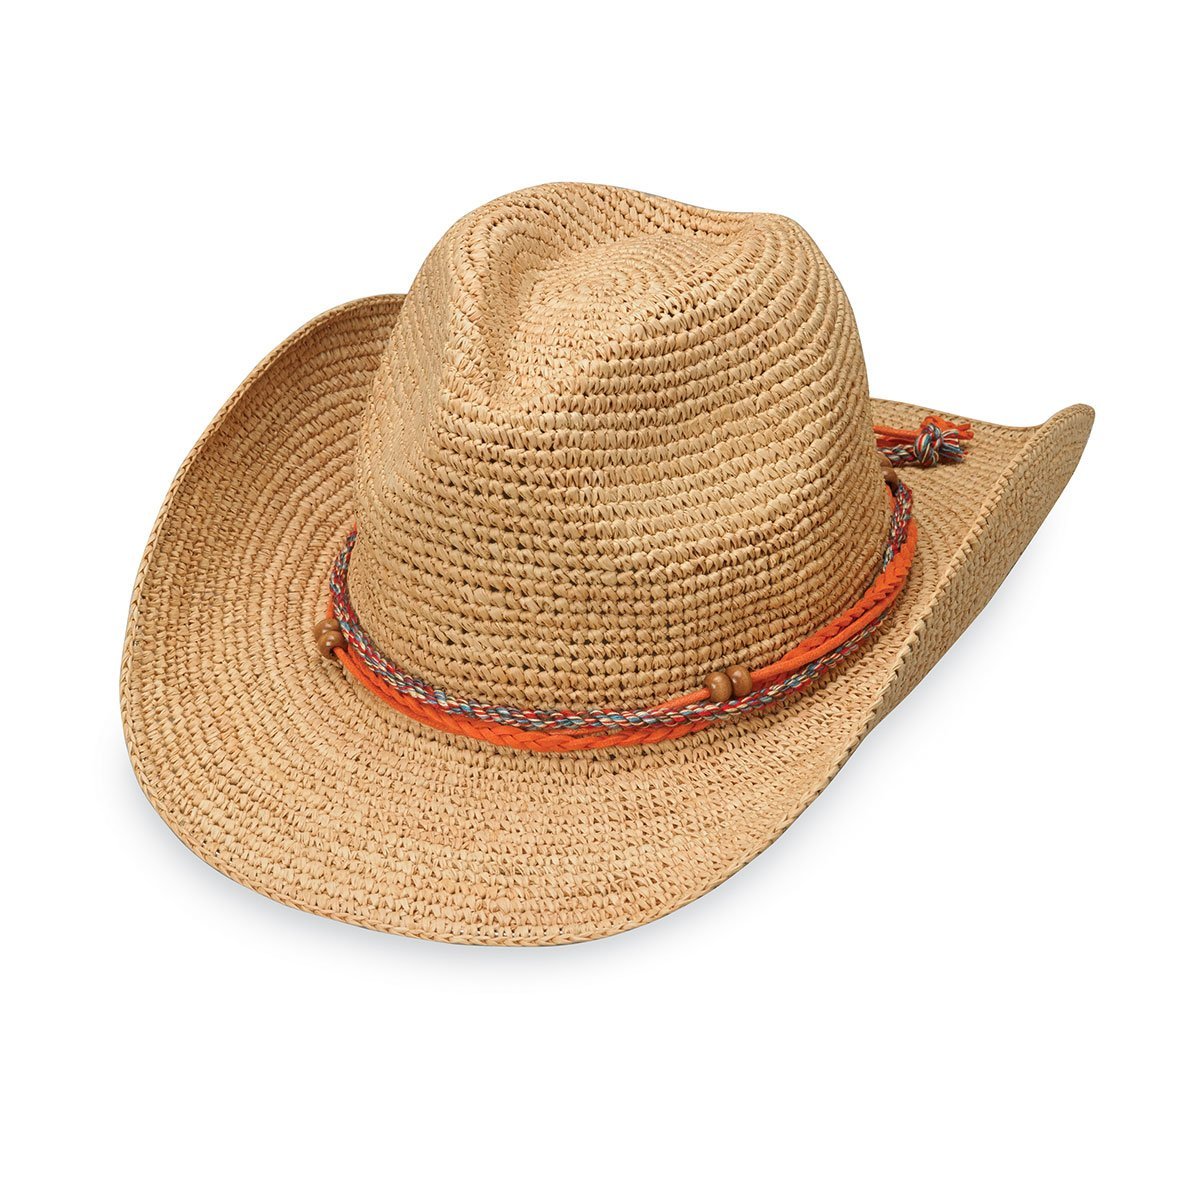 Featuring Angled View of the Catalina Cowboy Natural Madagascar Raffia Sun Hat in Natural from Wallaroo